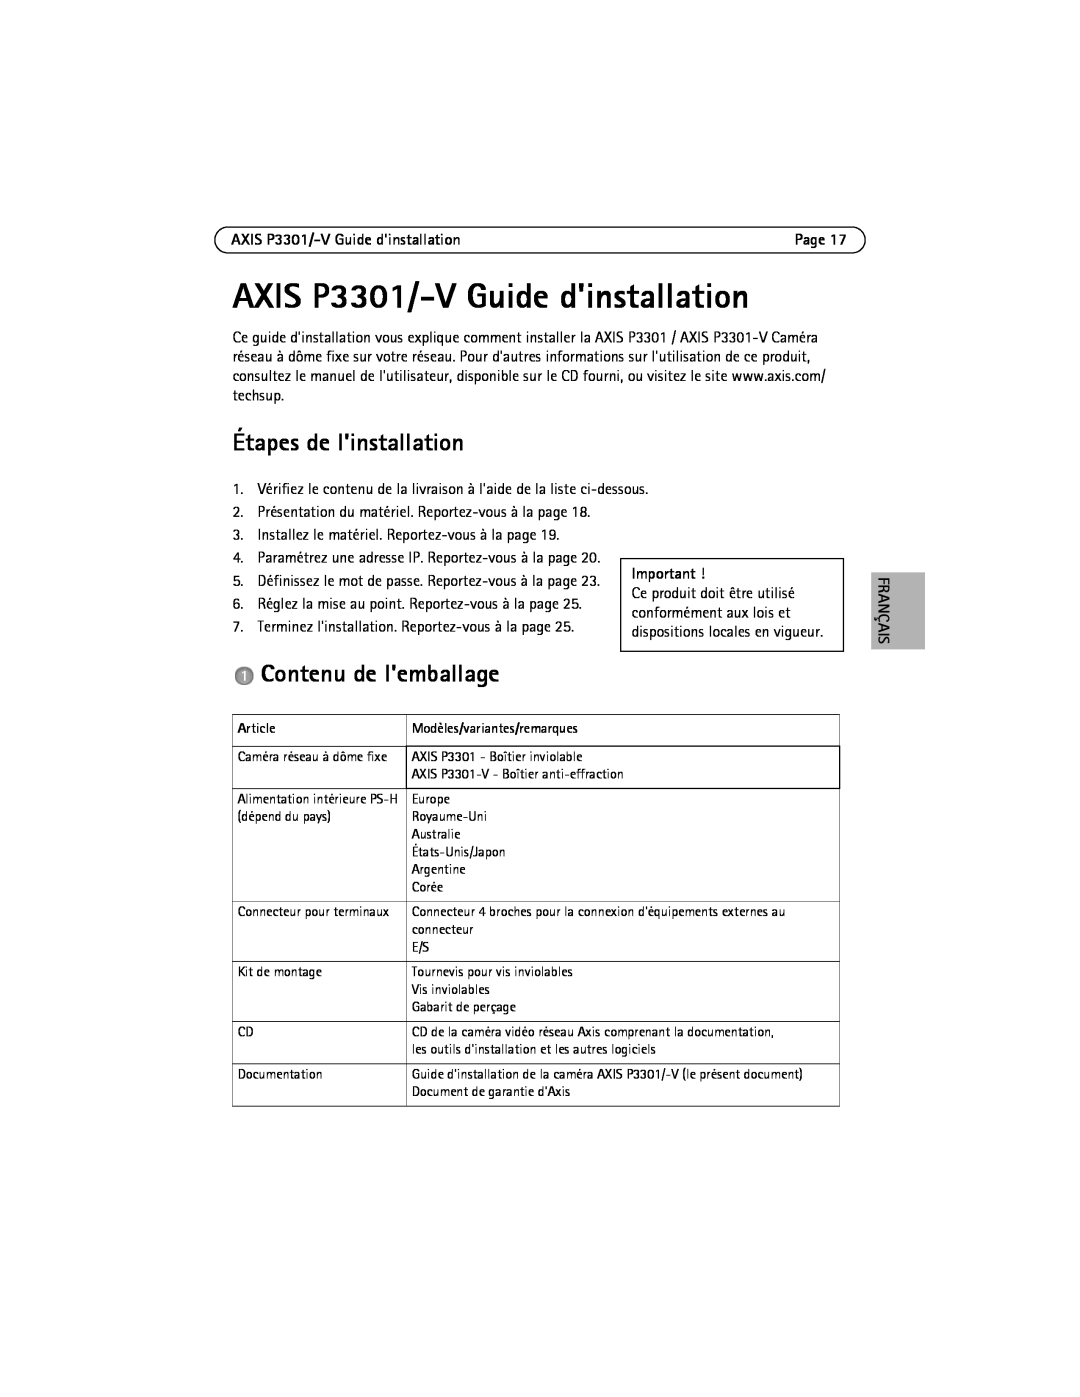 Axis Communications manual AXIS P3301/-V Guide dinstallation, Étapes de linstallation, Contenu de lemballage, Français 